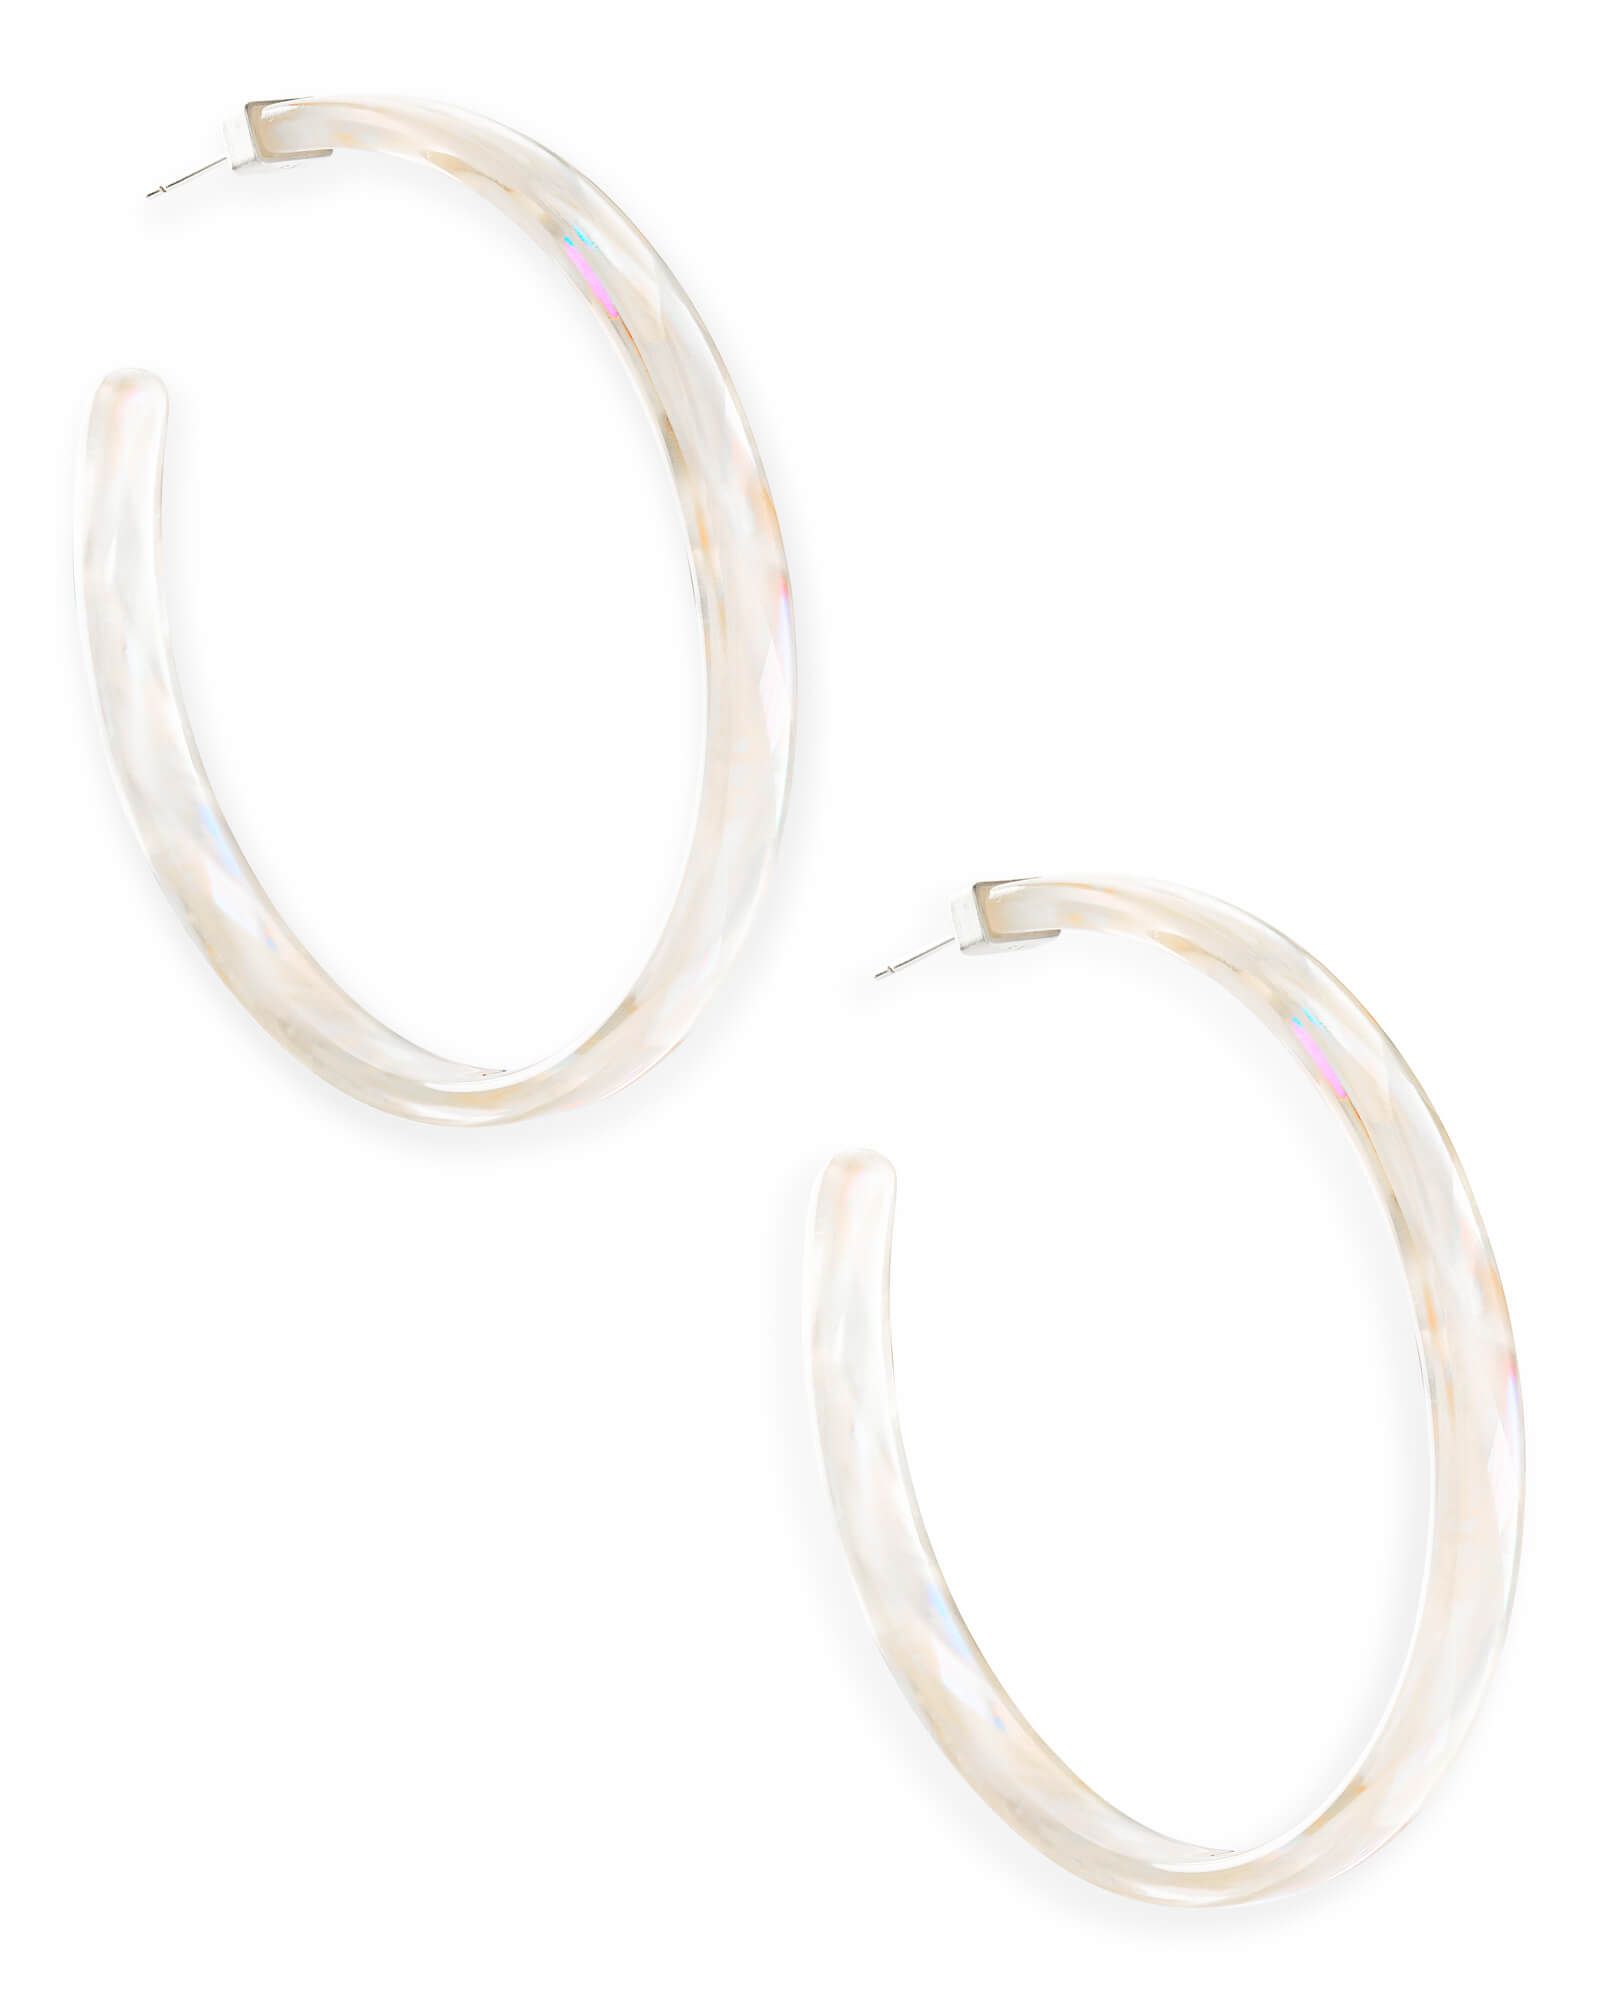 Kash Hoop Earrings in Iridescent Acetate | Kendra Scott | Kendra Scott